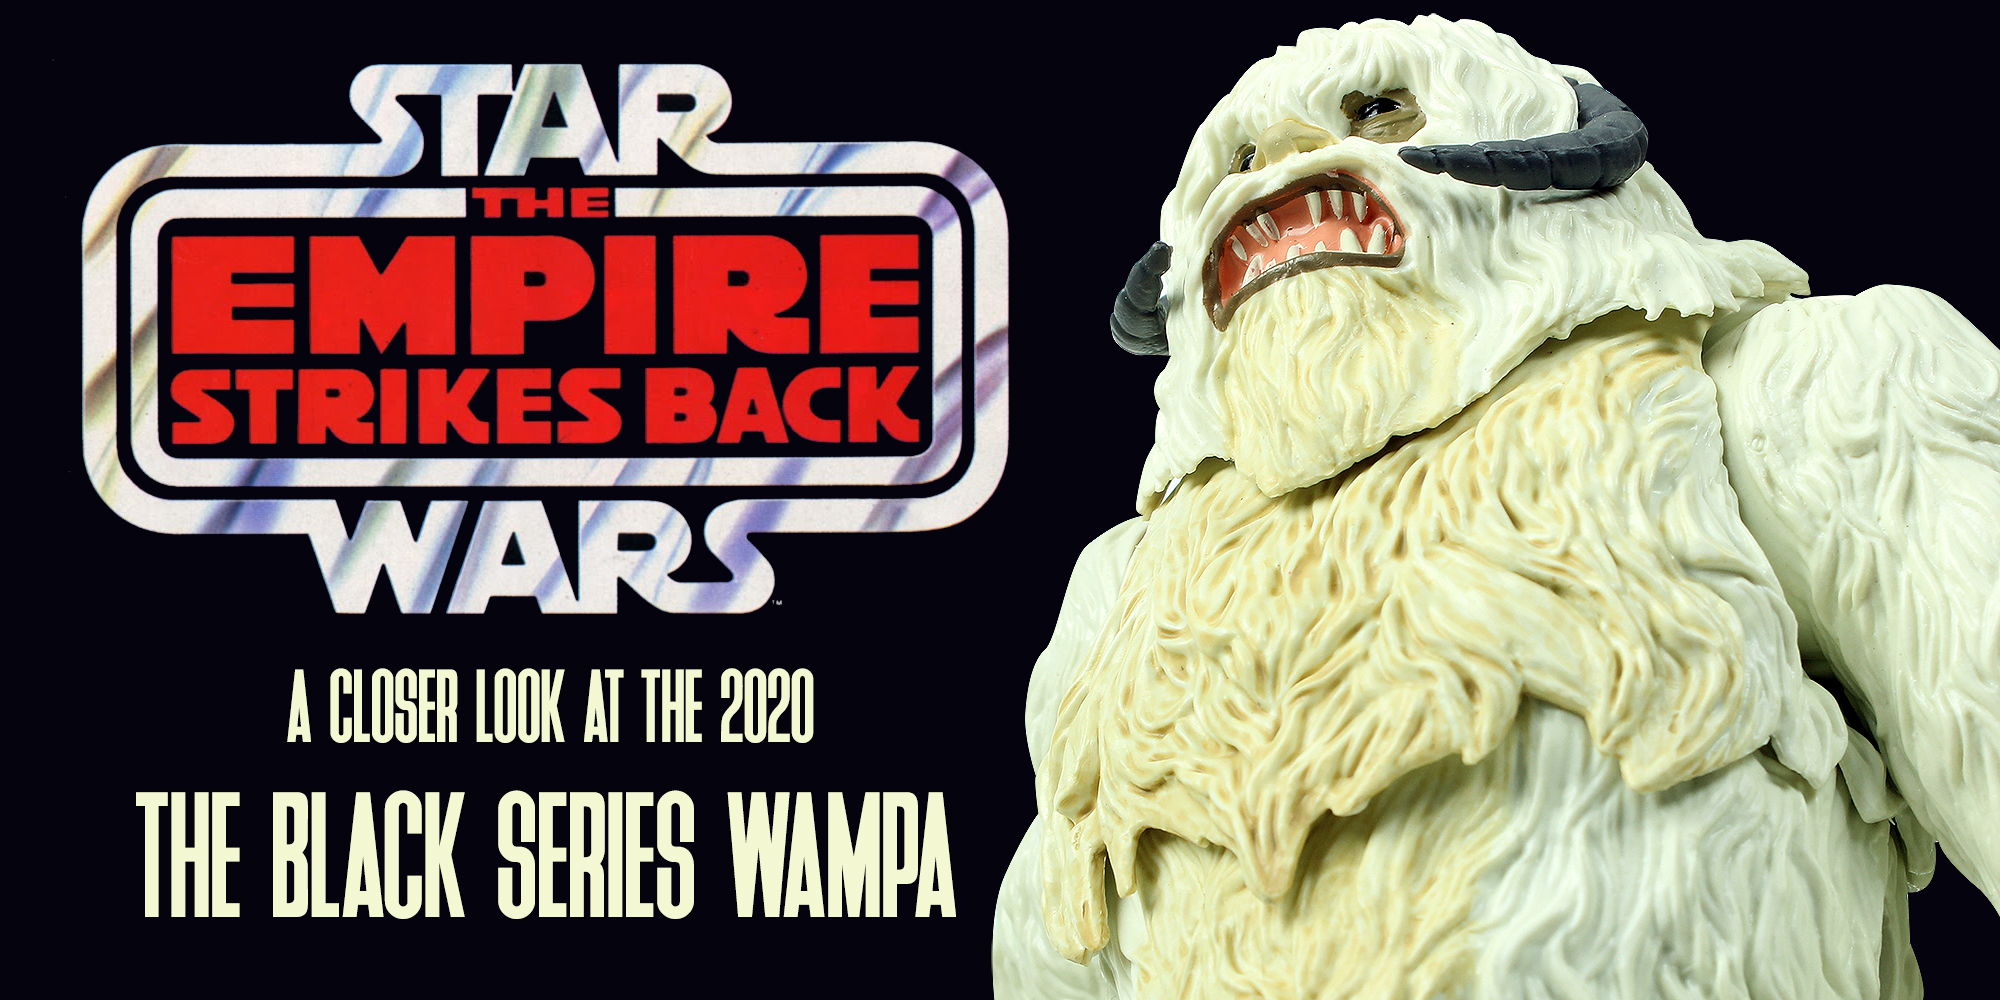 A Closer Look At The 2020 Black Series Wampa